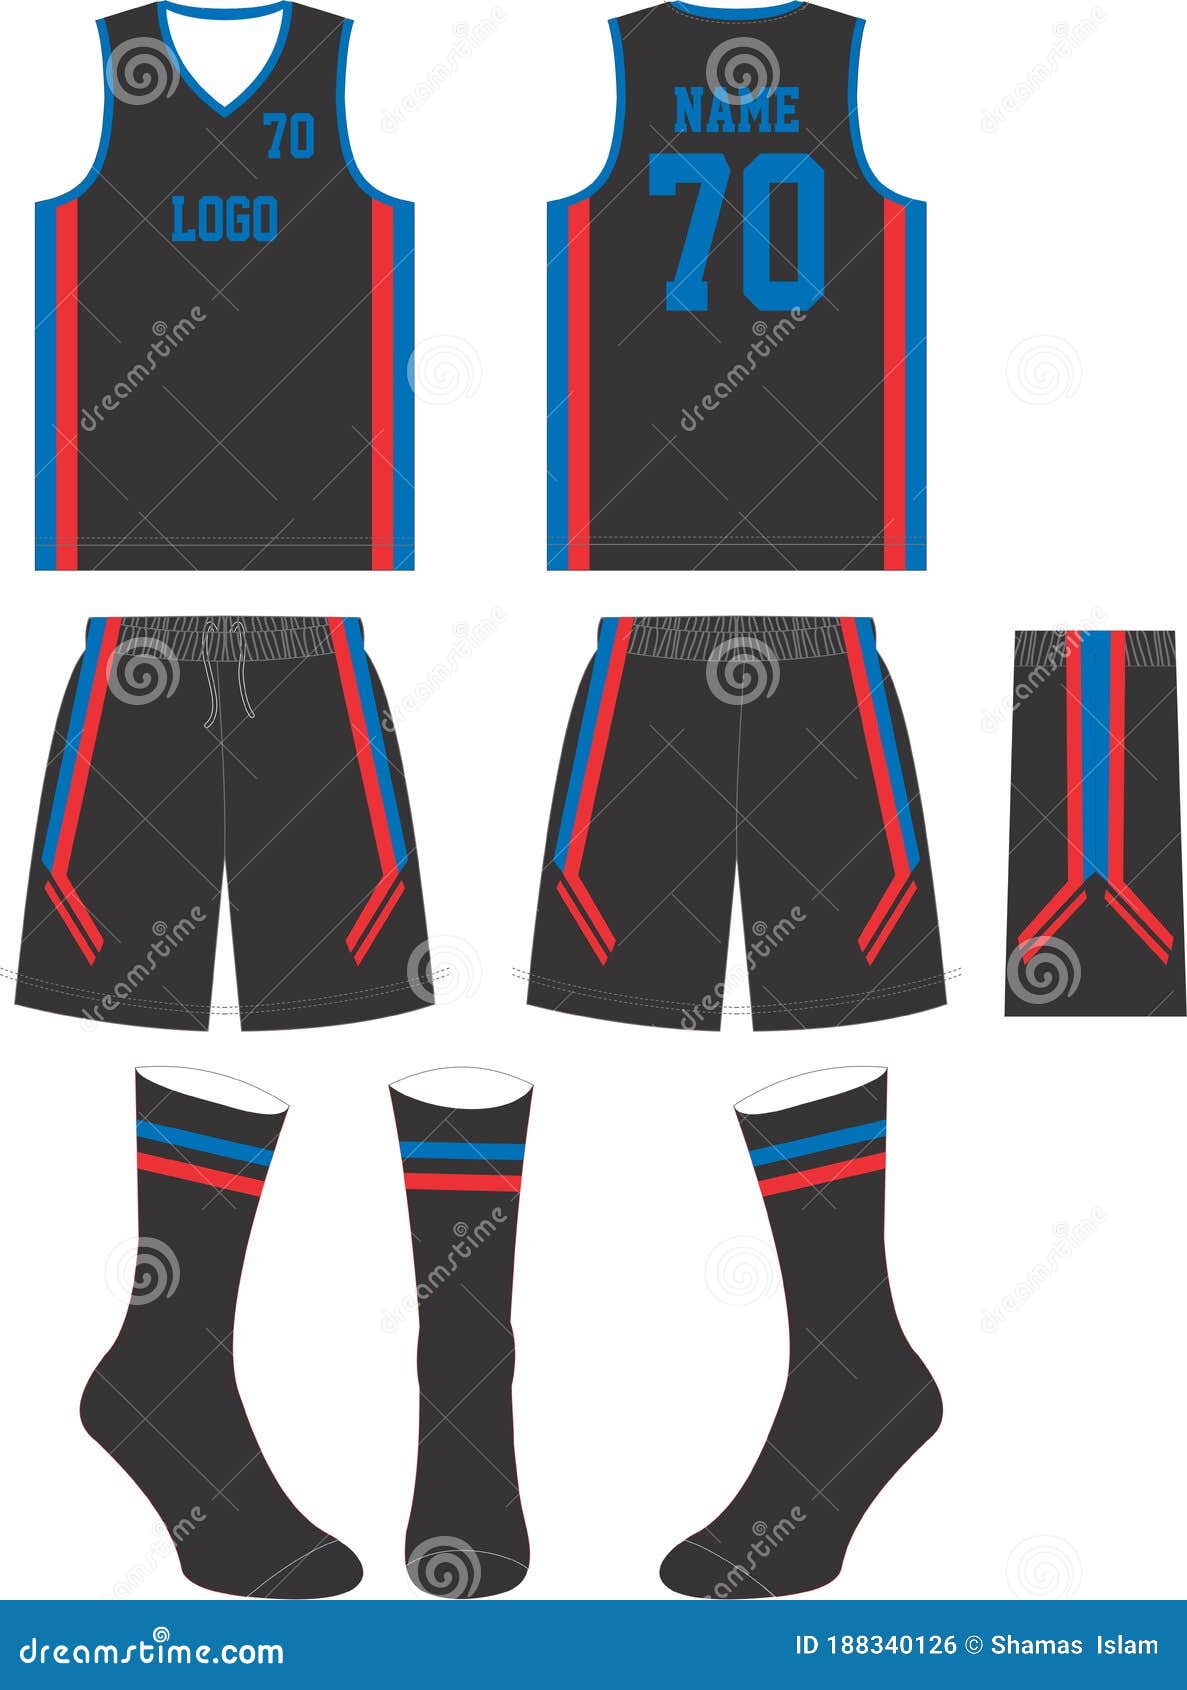 Basketball shorts custom design mock ups templates